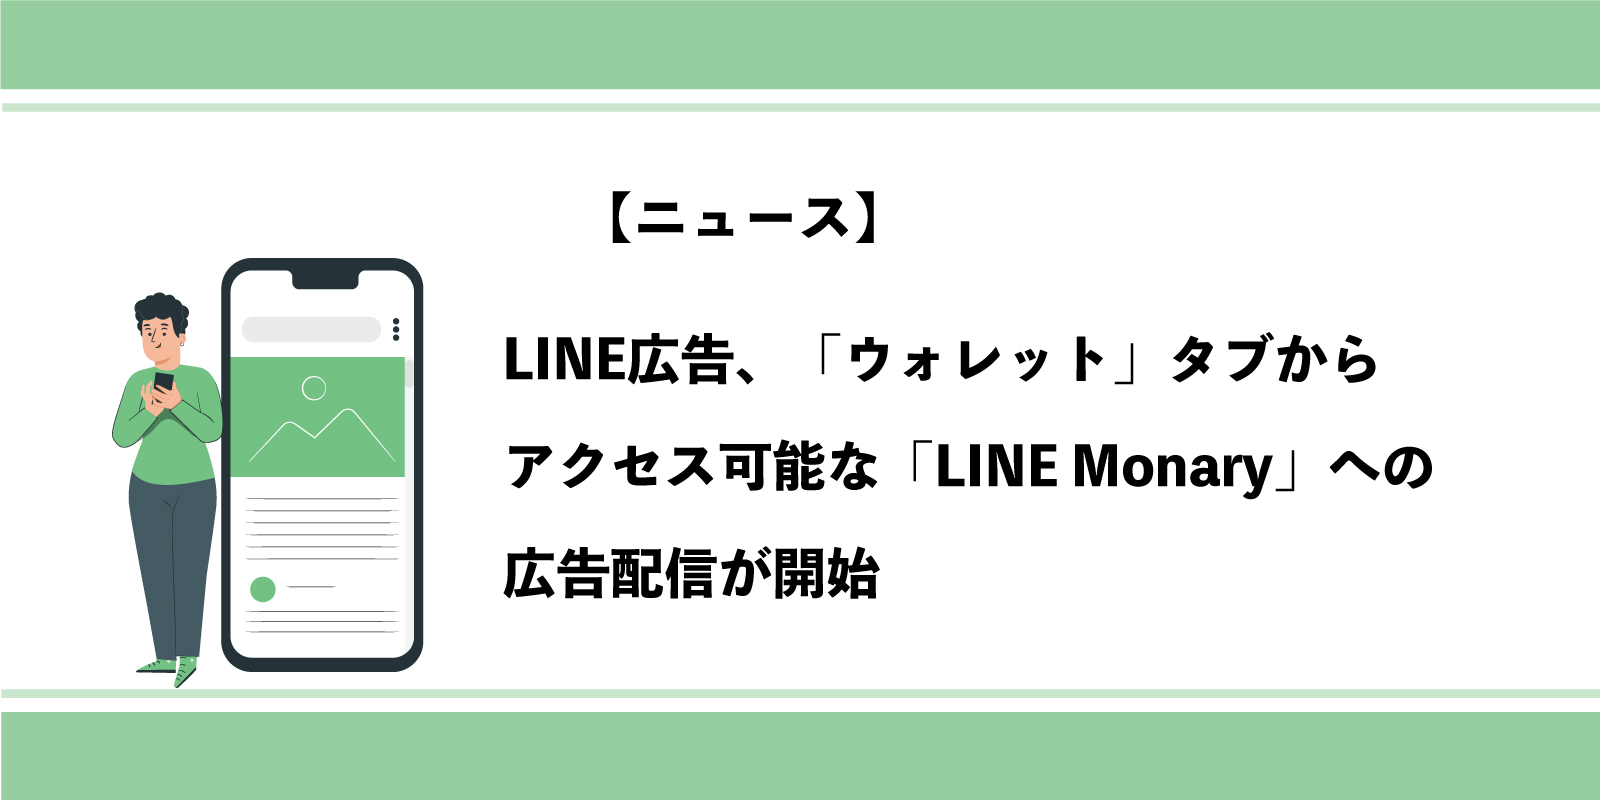 LINE広告、ウォレットタブからアクセス可能なLINE Monaryへの広告配信が開始